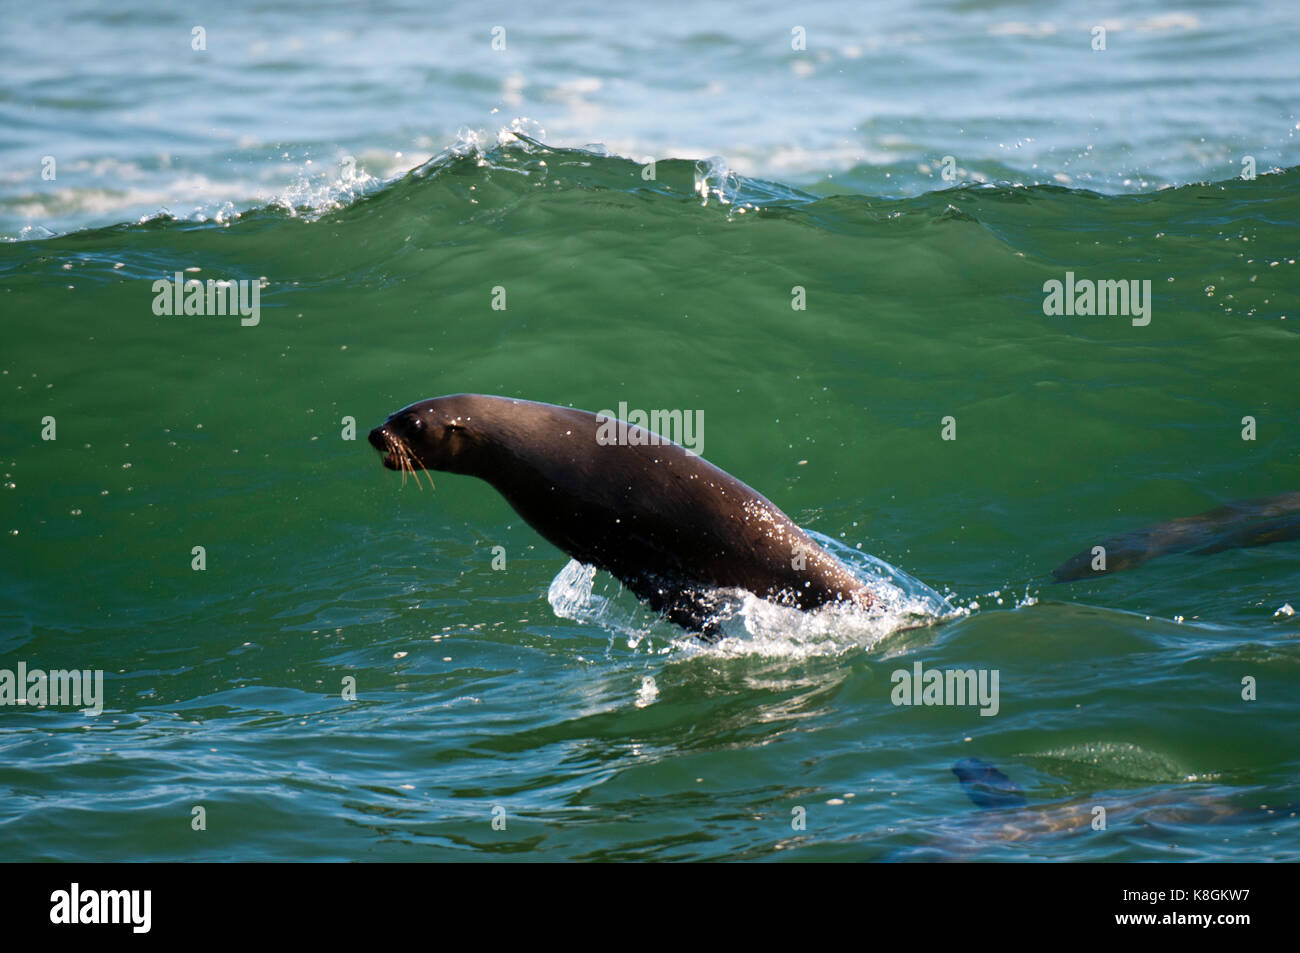 Cape fur seal colony (Arctocephalus pusilus), Skeleton Coast National Park, Namibia Stock Photo